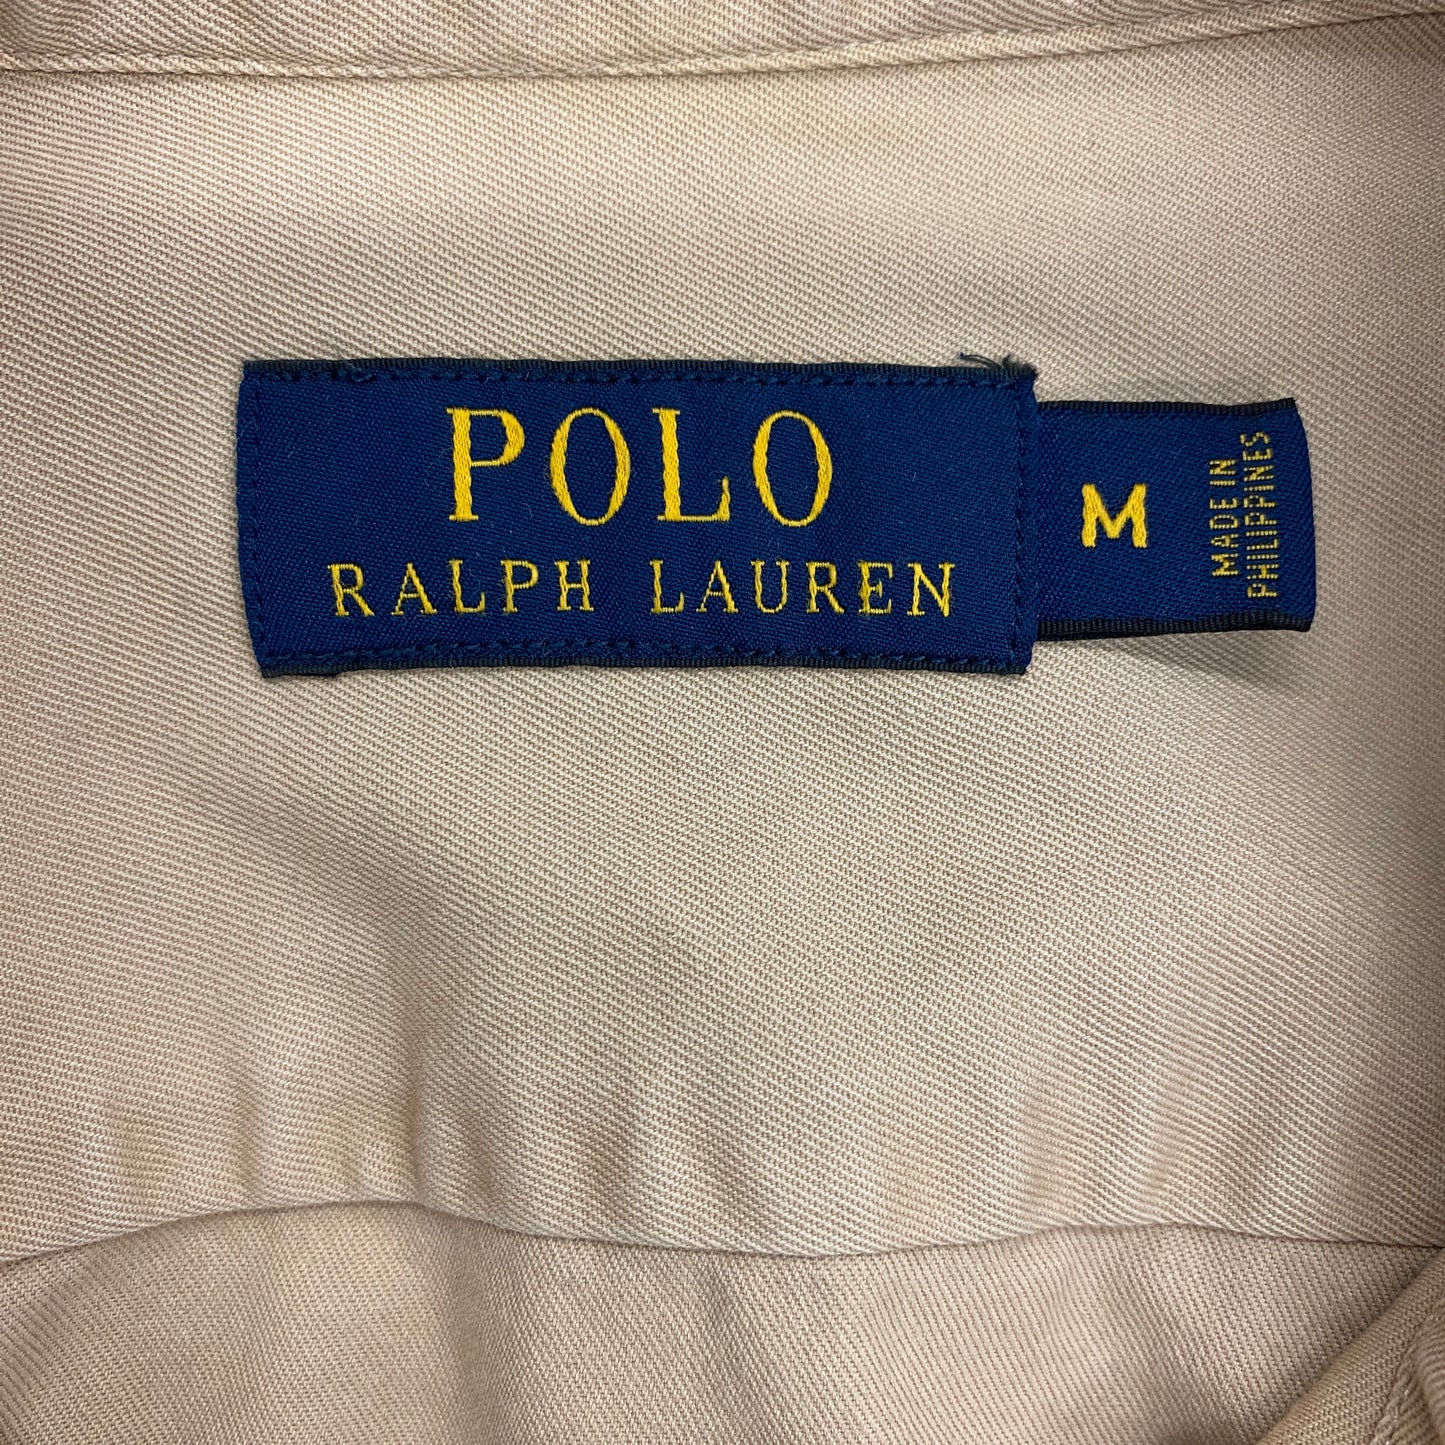 Polo Ralph Lauren Type 1 RL-67 "Hawaii Naval Base" Button Up - Size Medium